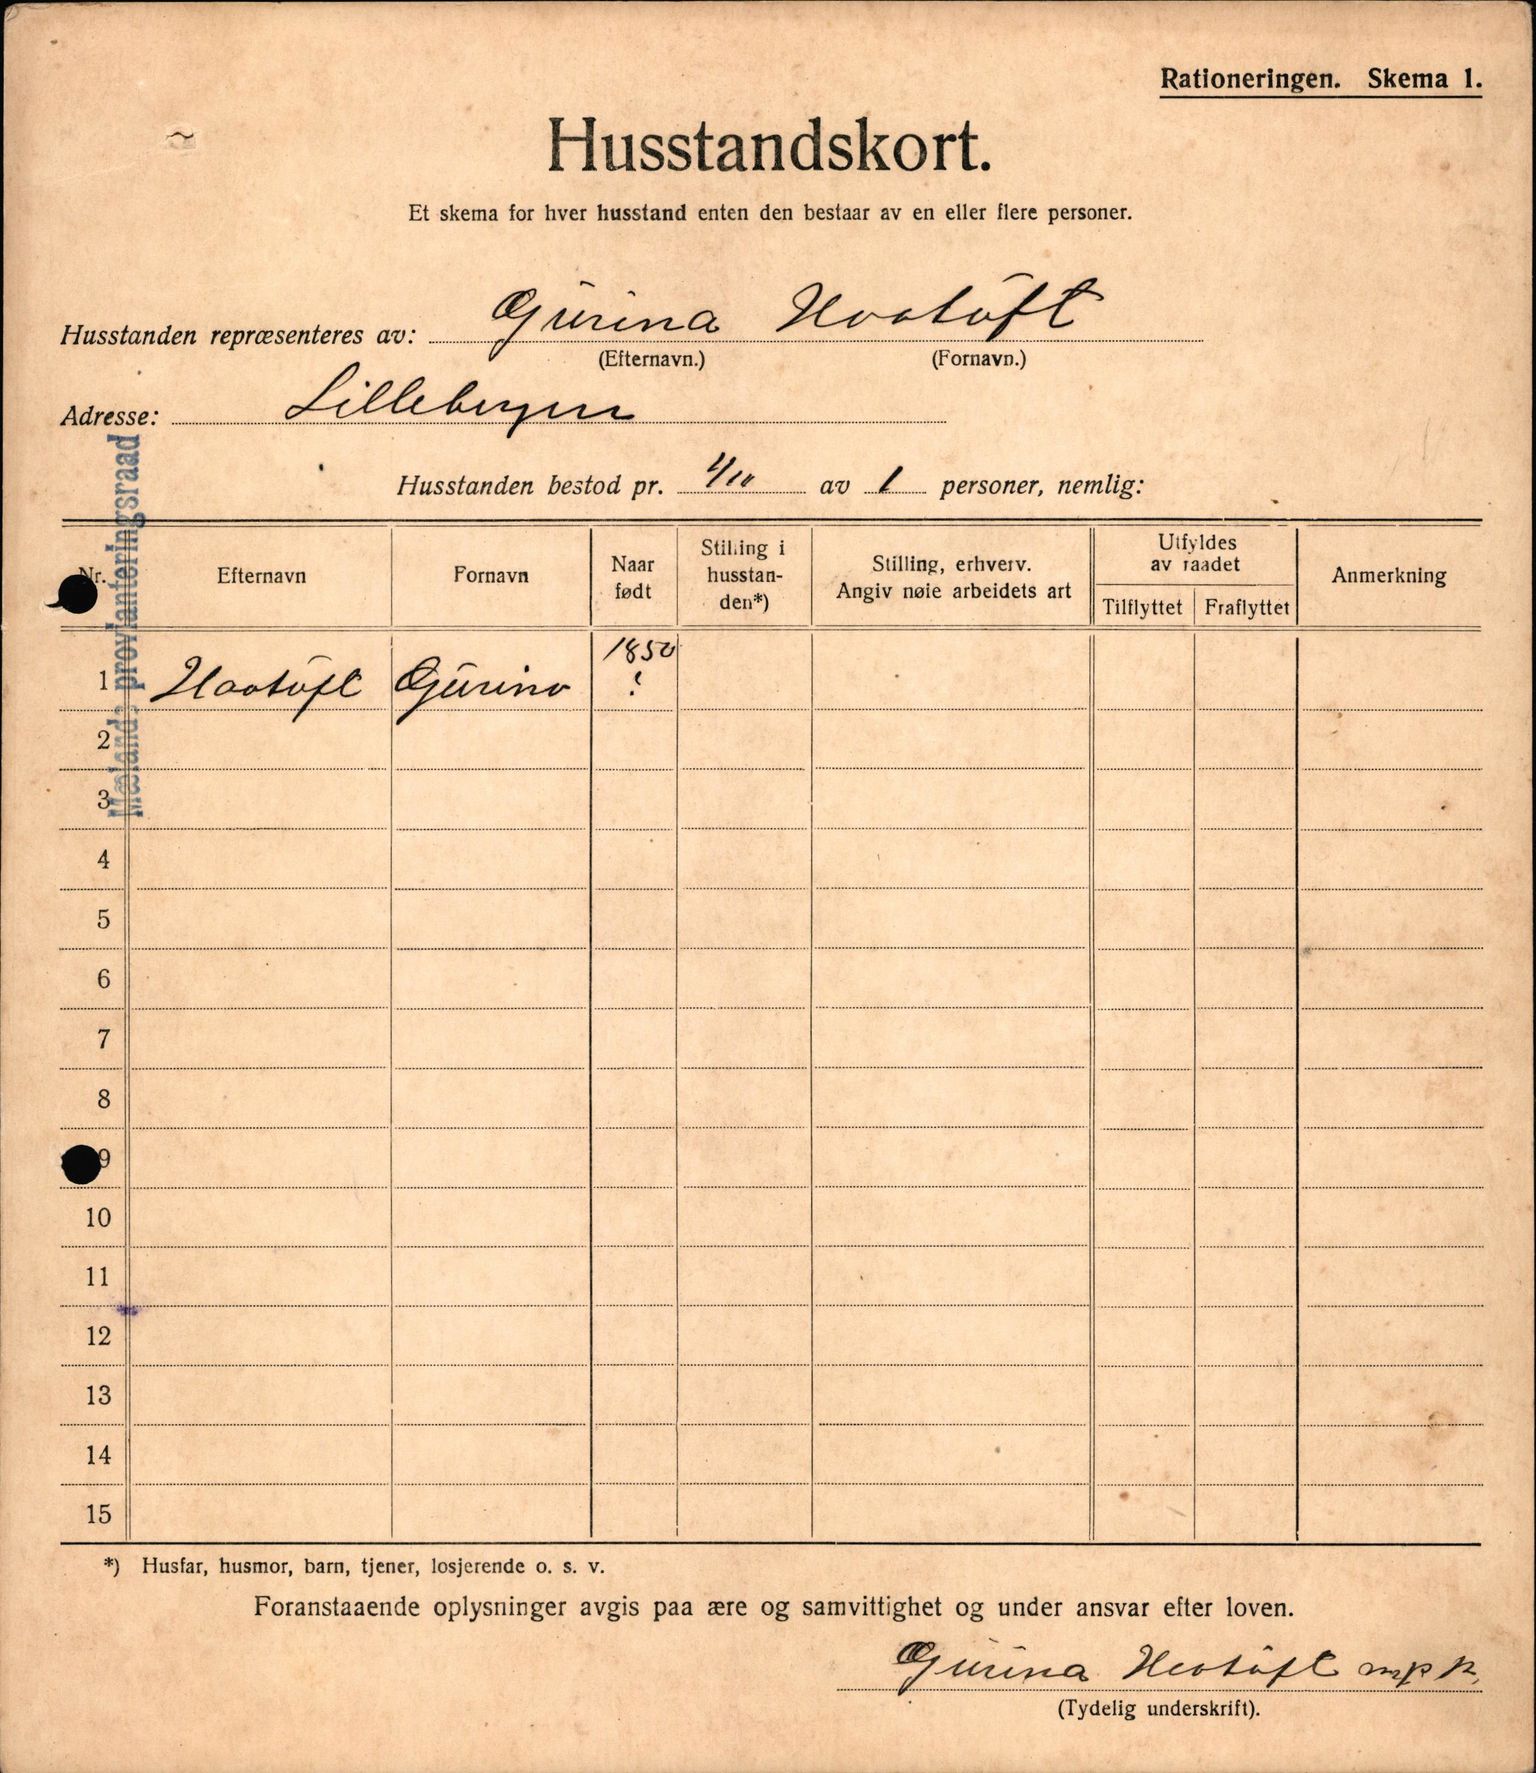 IKAH, Meland kommune, Provianteringsrådet, Husstander per 01.11.1917, 1917-1918, s. 270